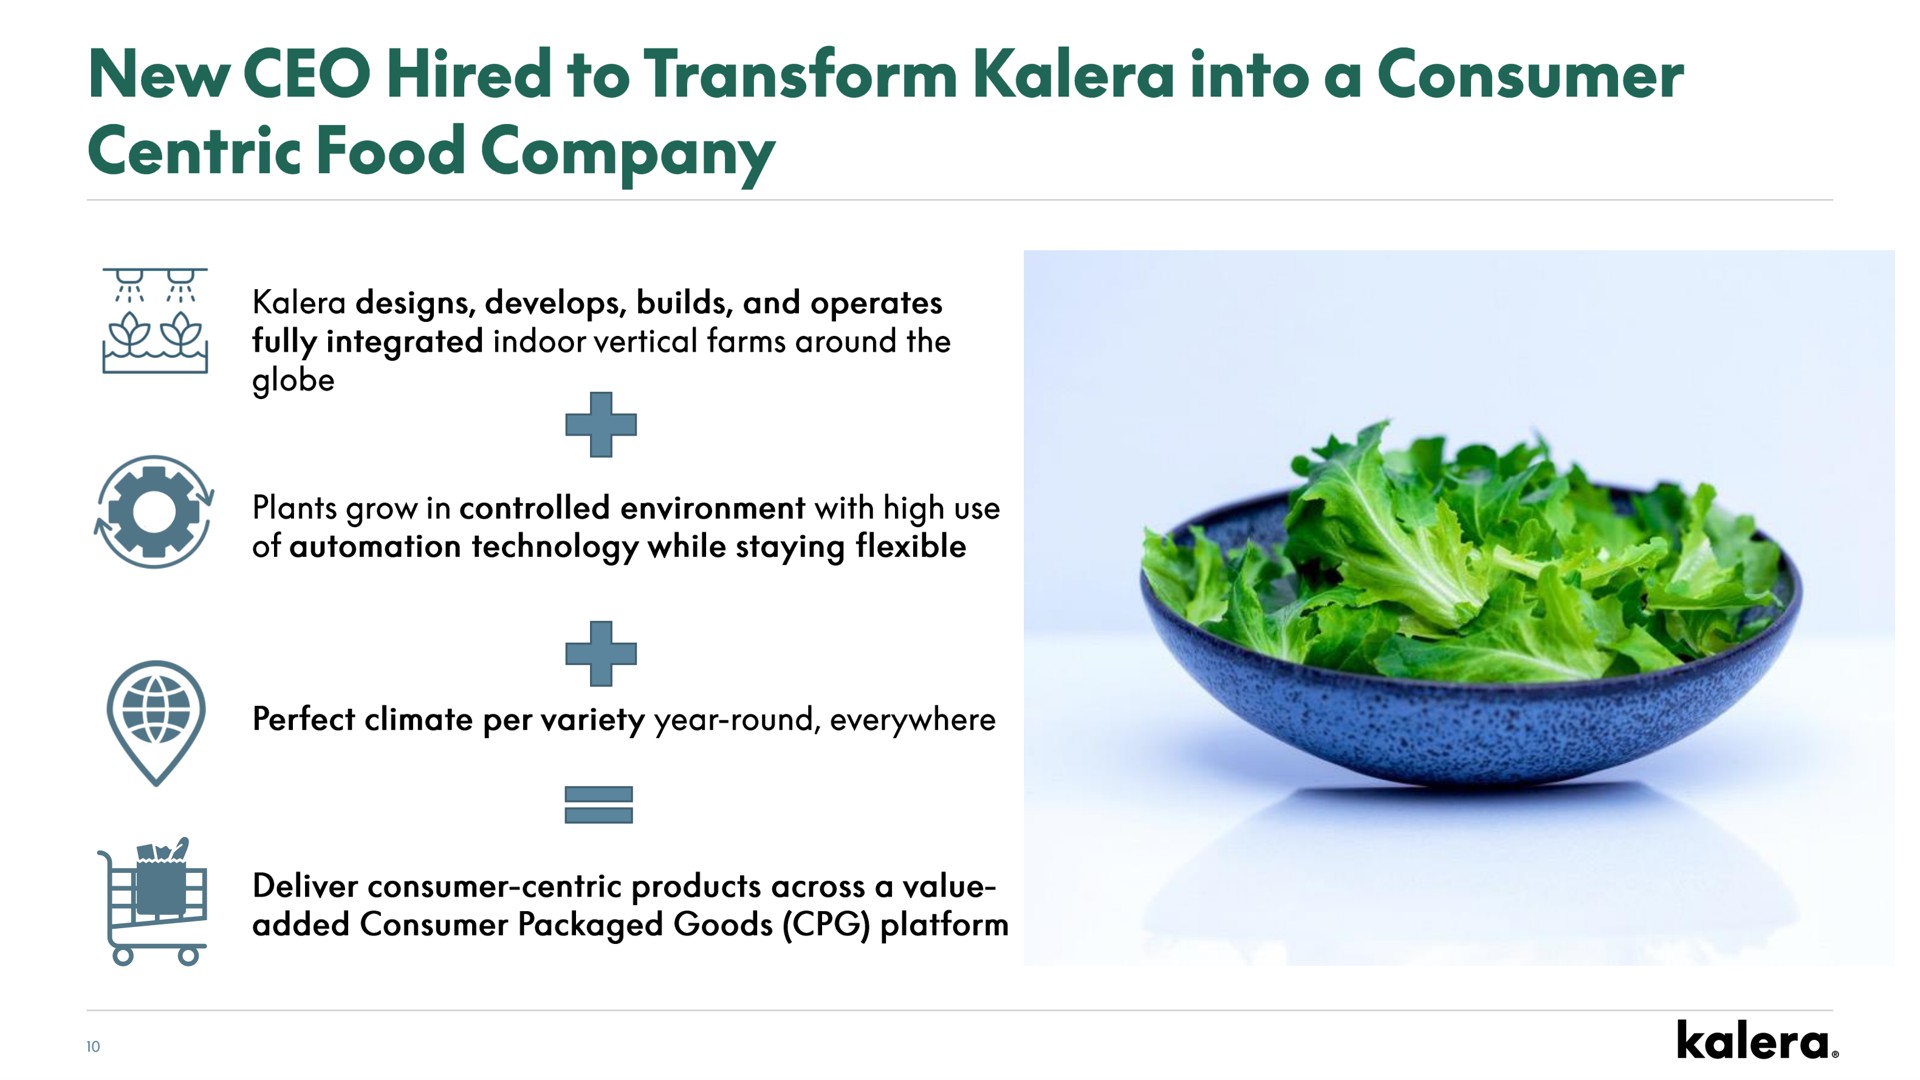 centric food company | Kalera